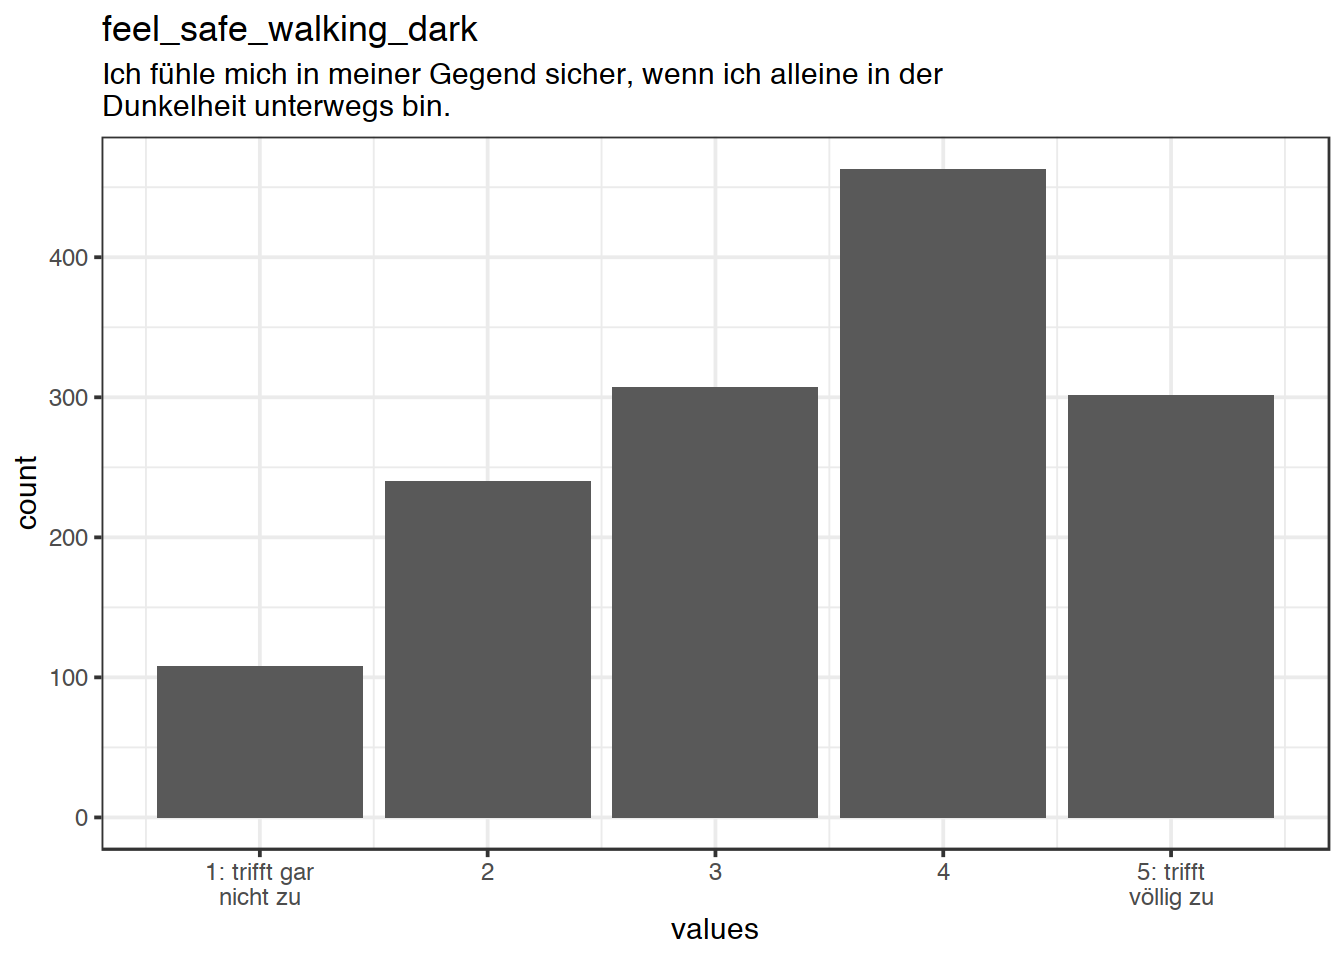 Distribution of values for feel_safe_walking_dark